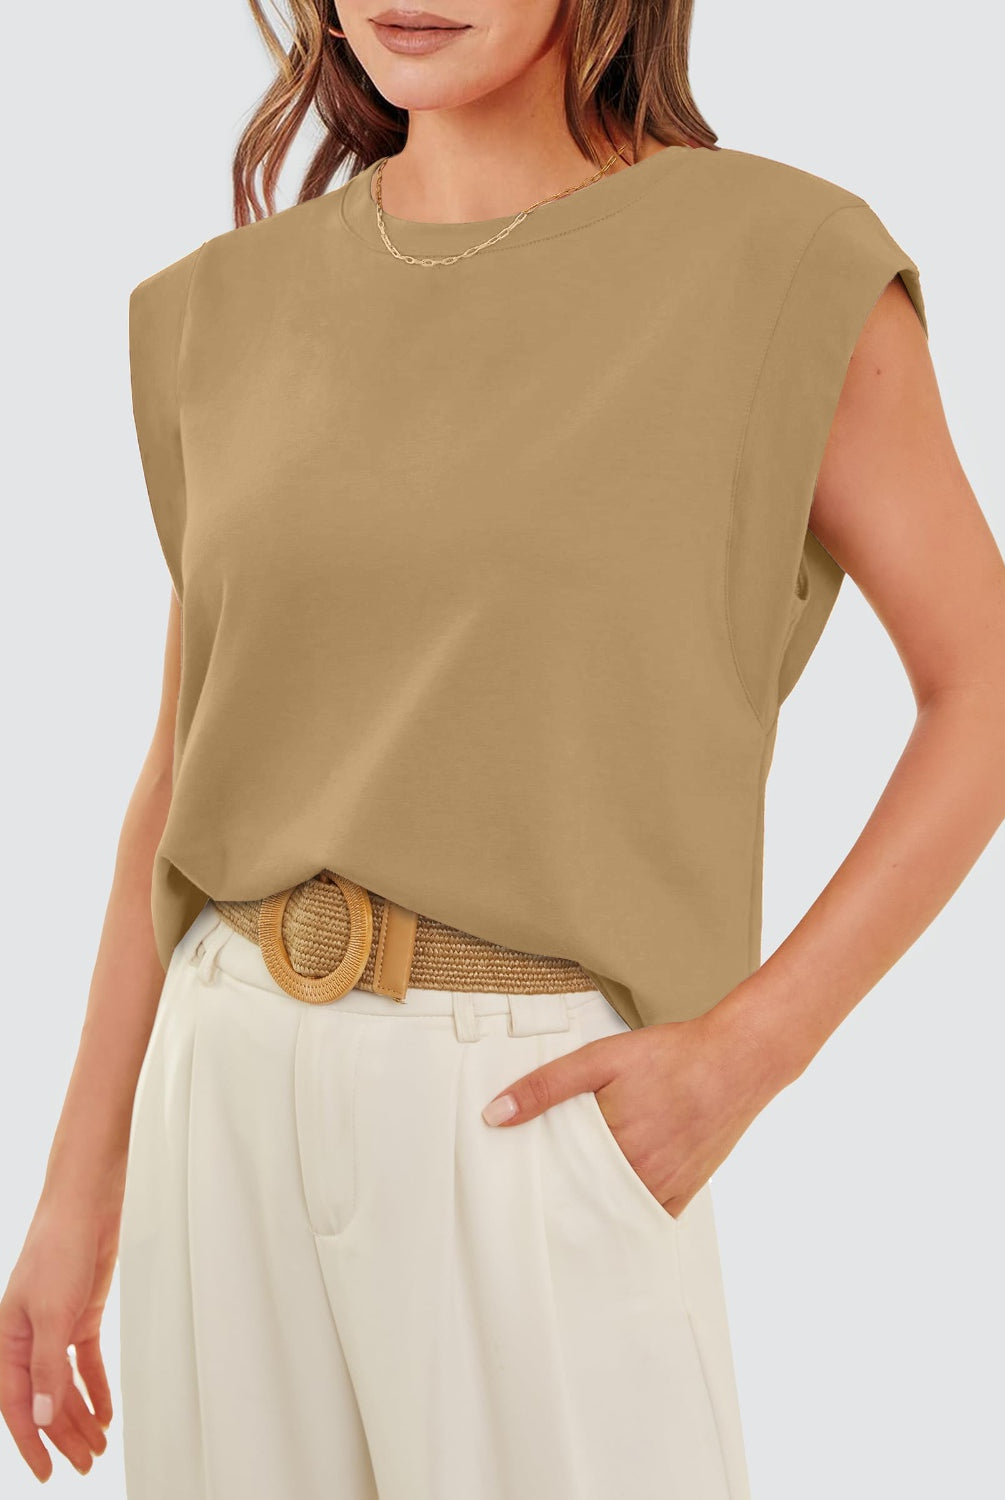 Tan View. Round Neck Cap Sleeve Tank-Krush Kandy, Women's Online Fashion Boutique Located in Phoenix, Arizona (Scottsdale Area)